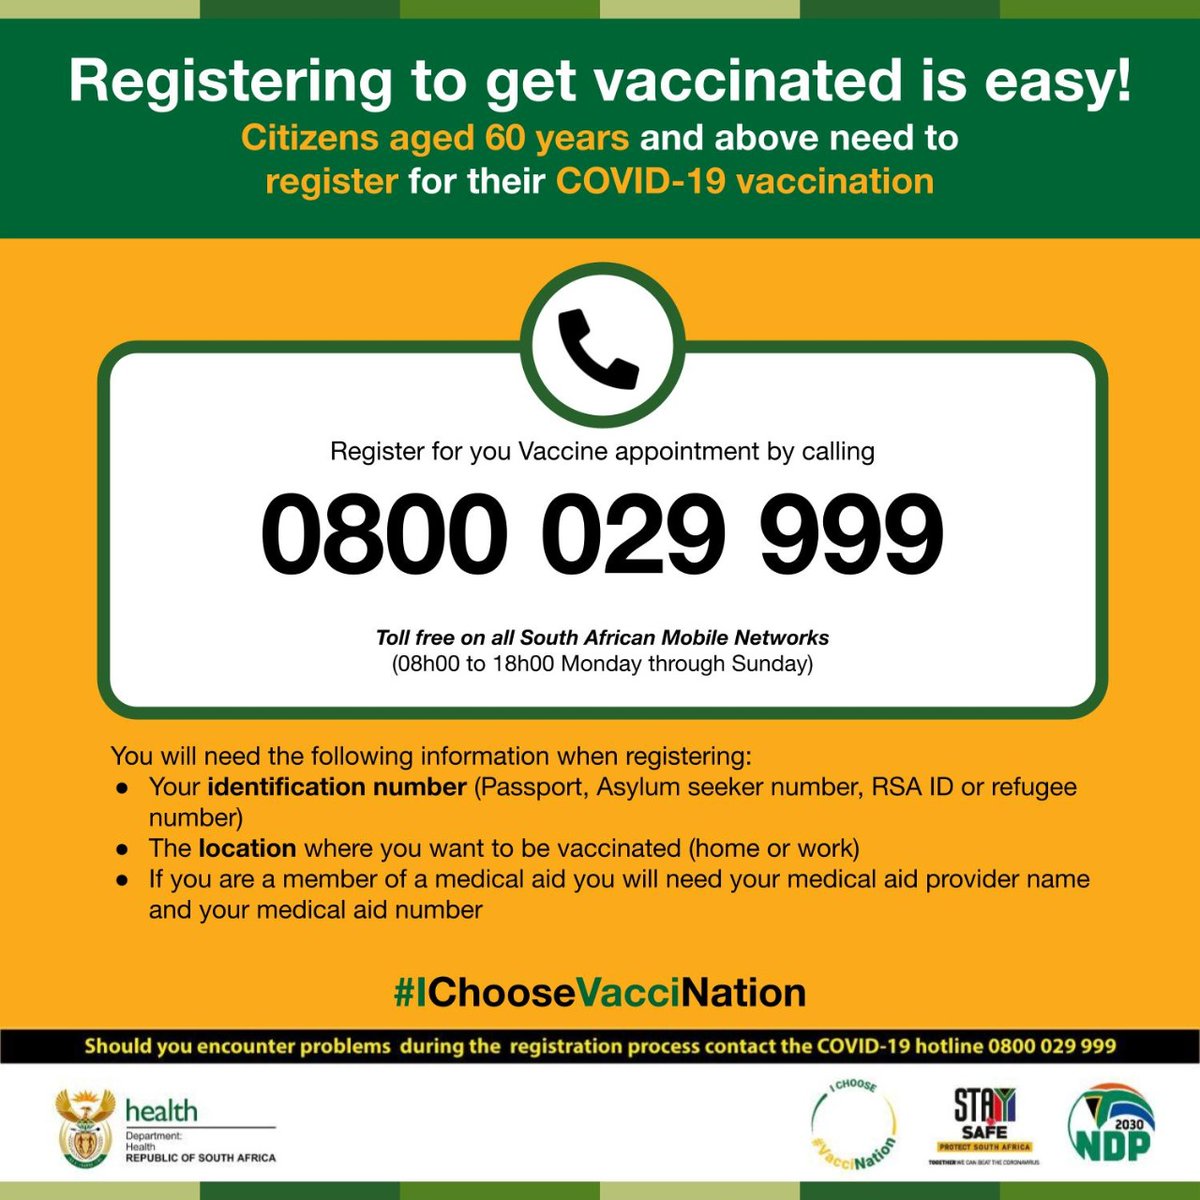 Register for Vaccination

#choosevaccination